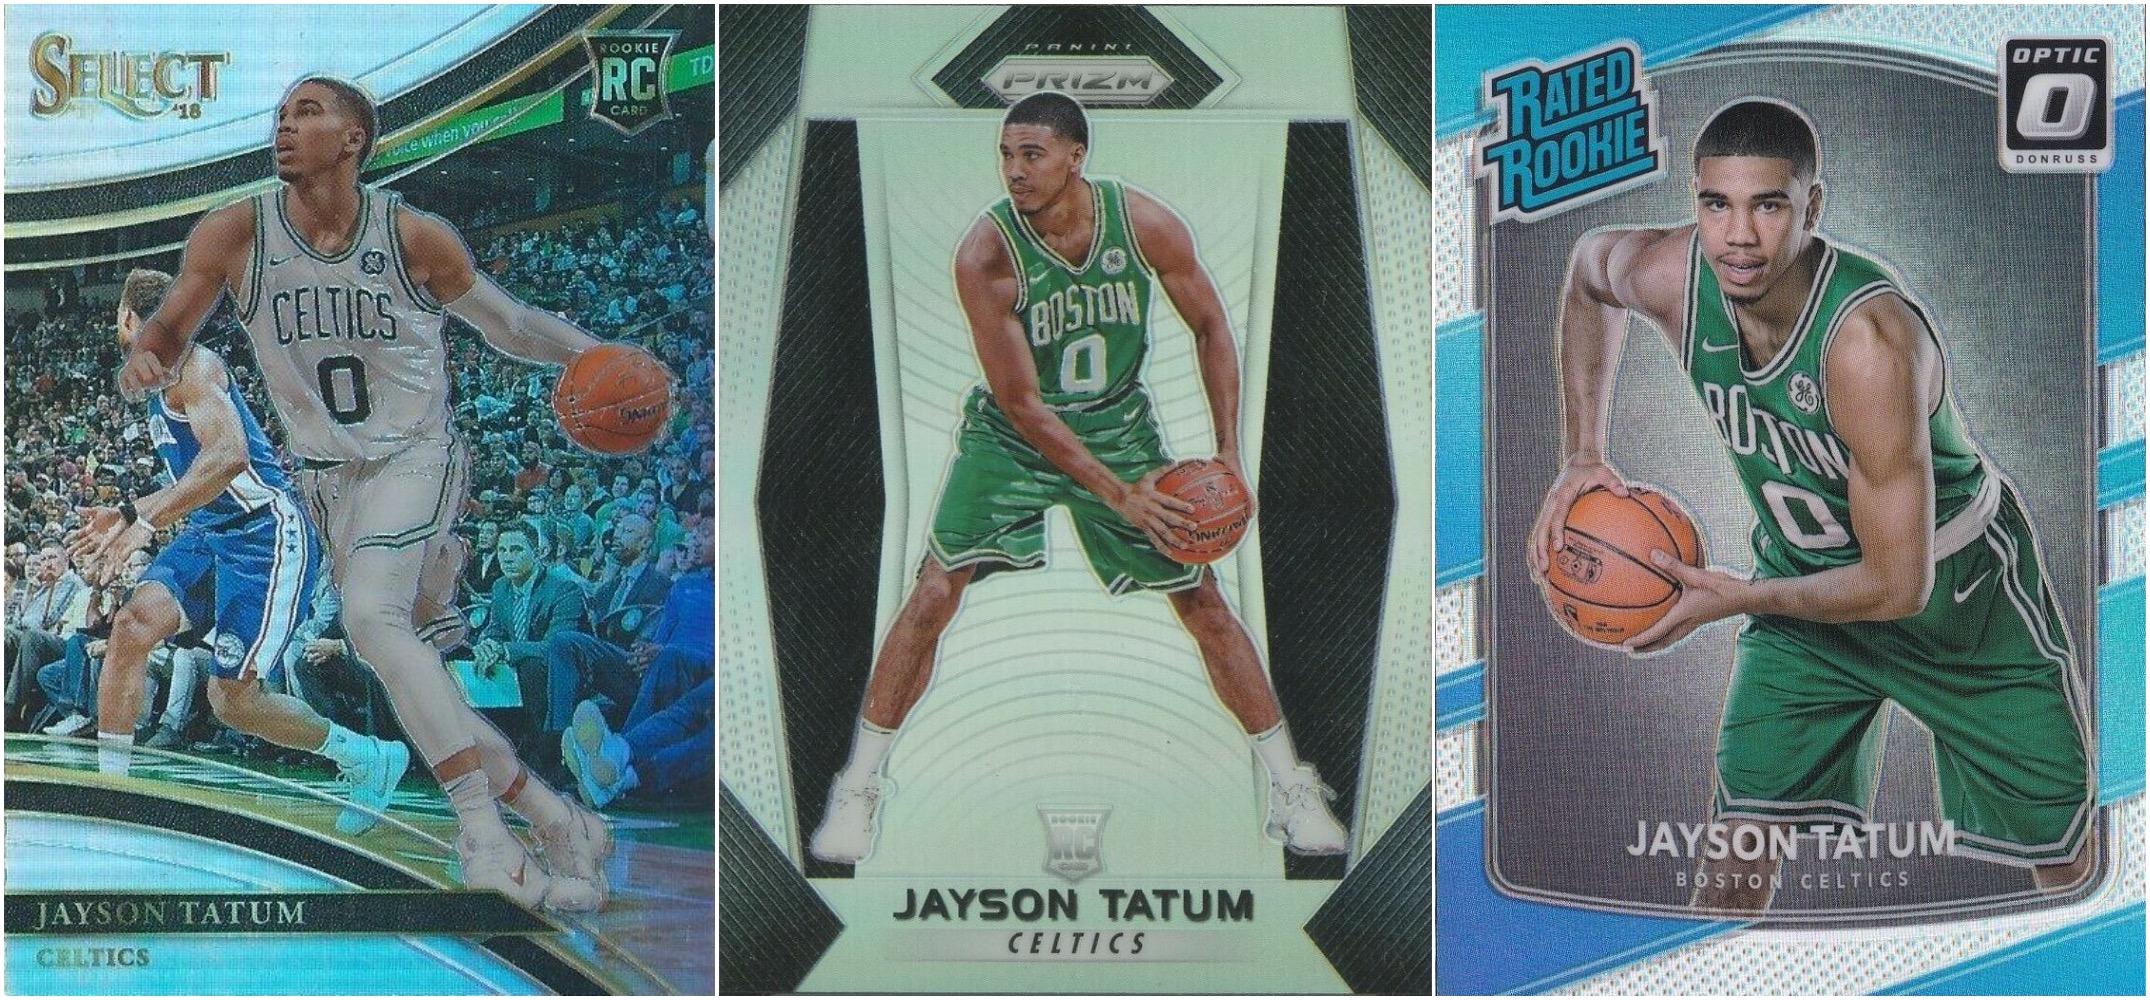 Three images of Jayson Tatum sports trading cards